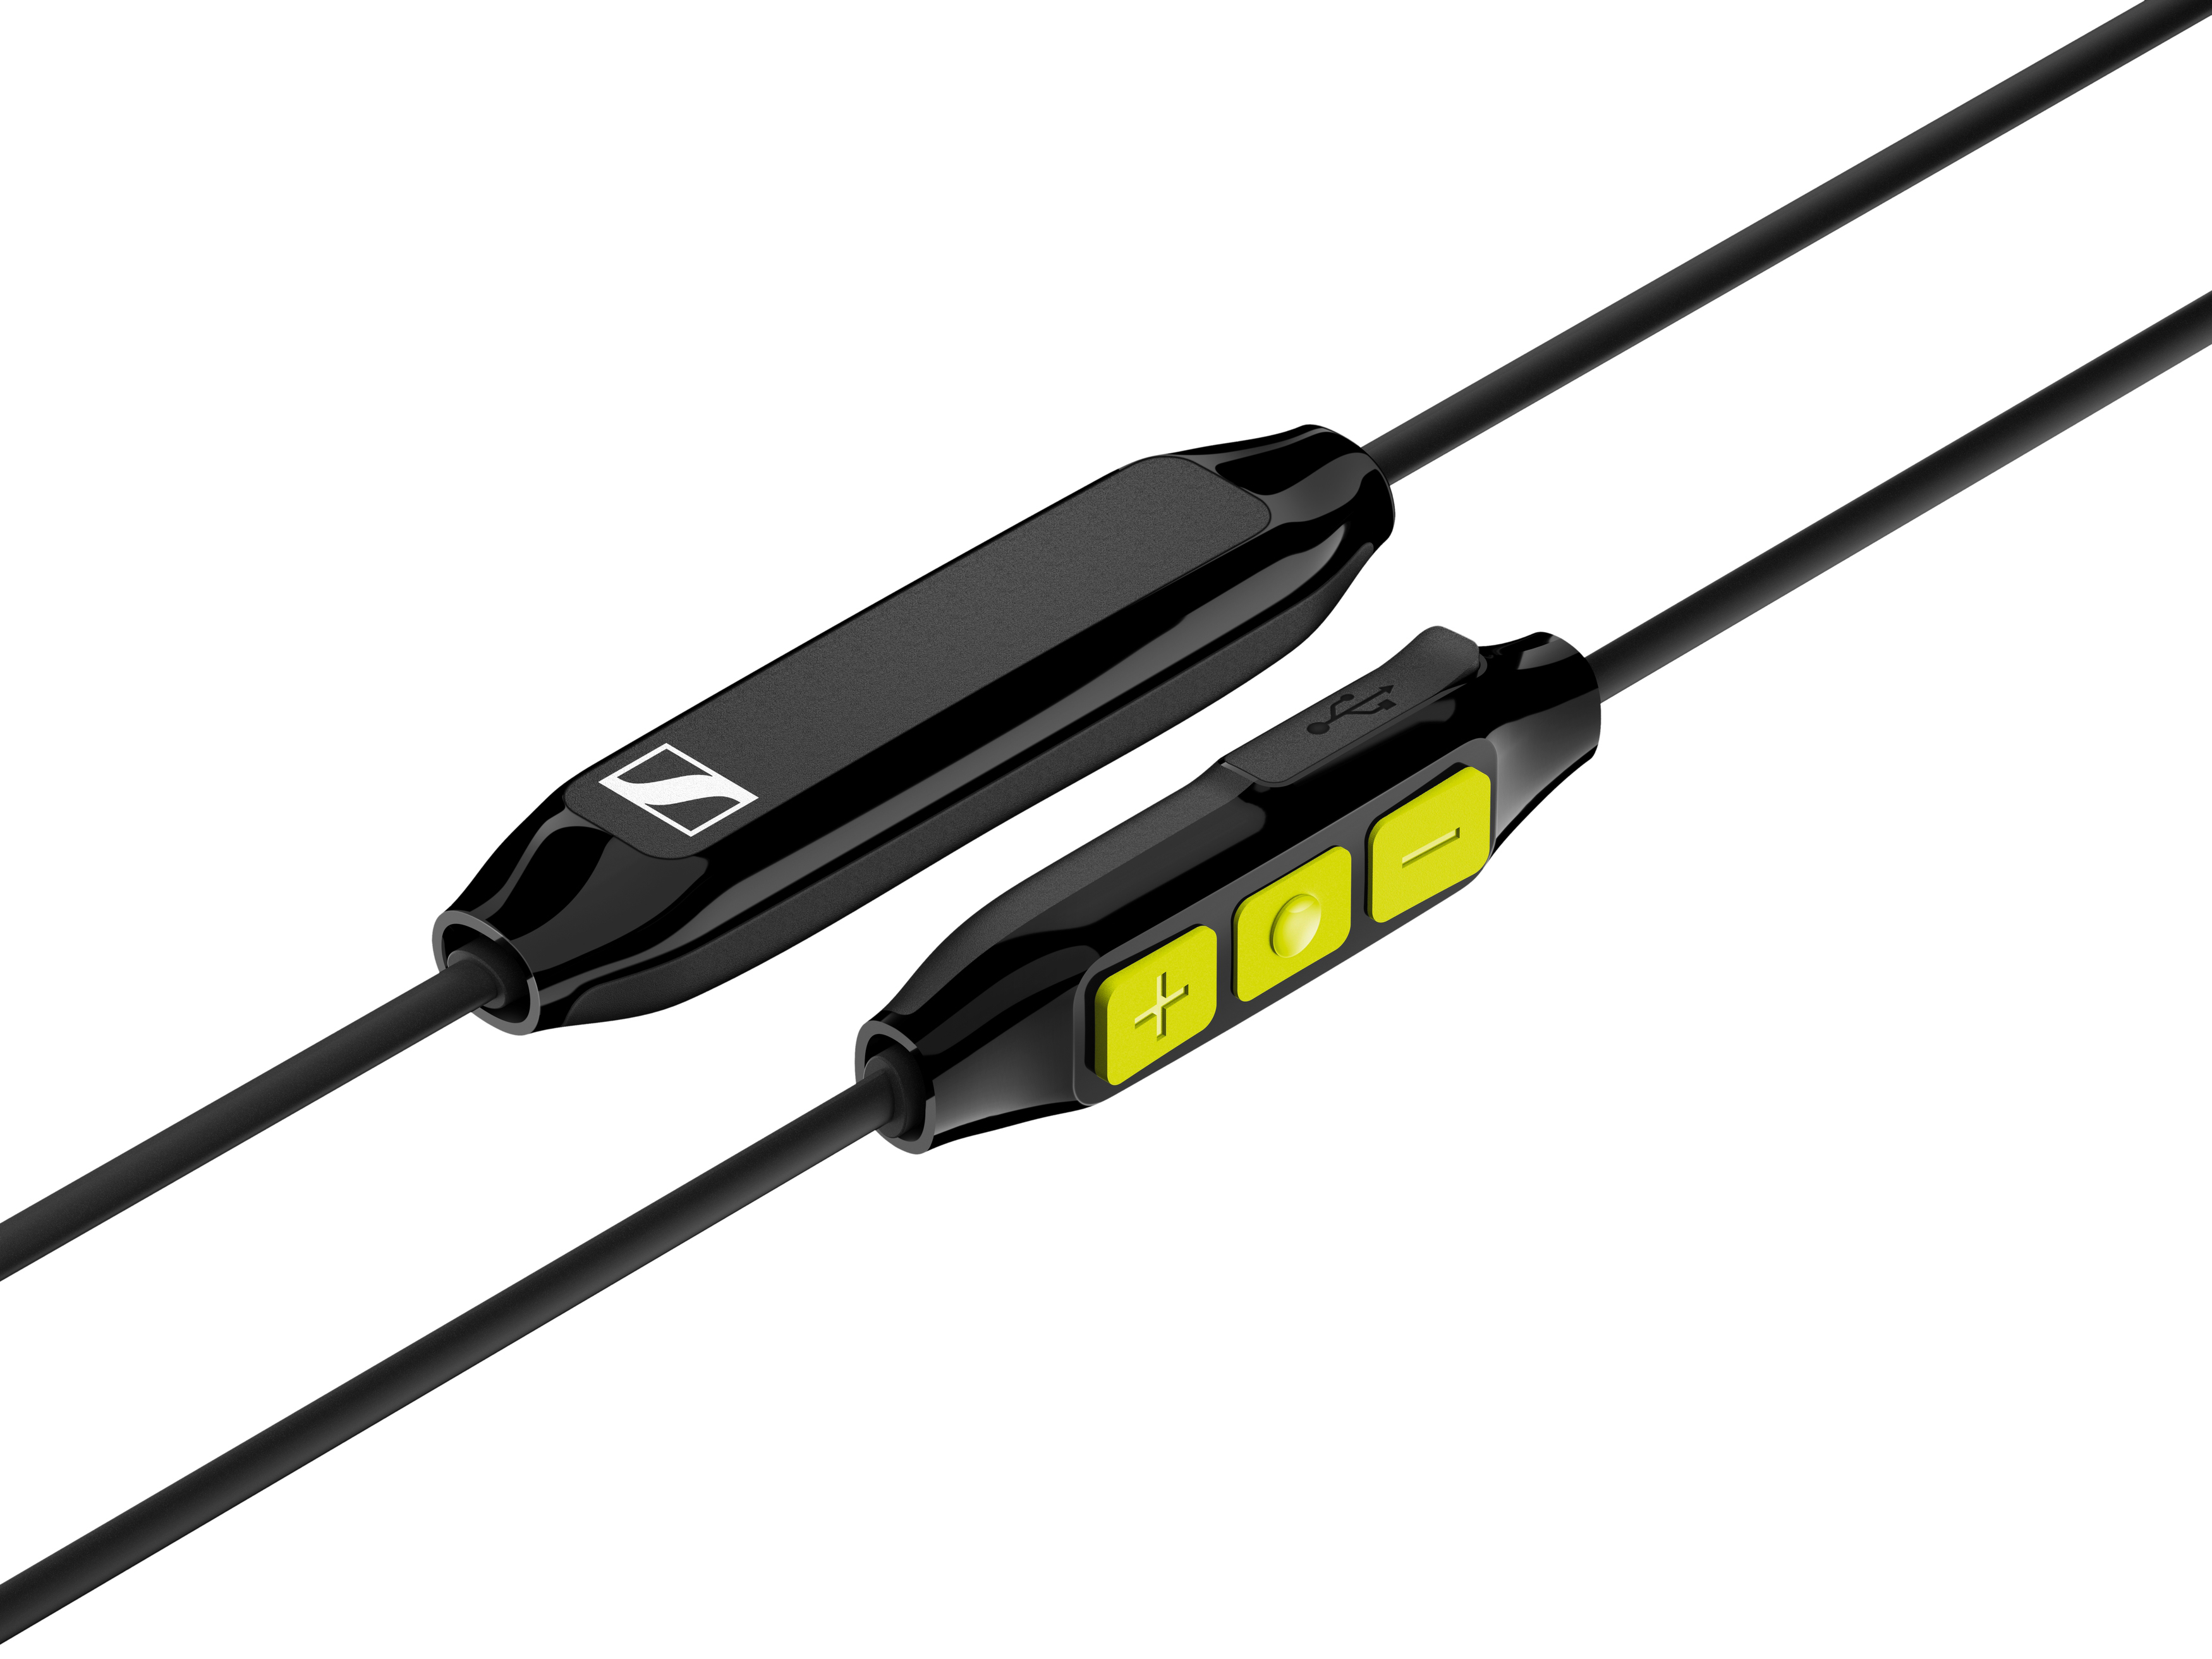 SENNHEISER CX SPORT, In-ear Bluetooth Schwarz/Lime Kopfhörer